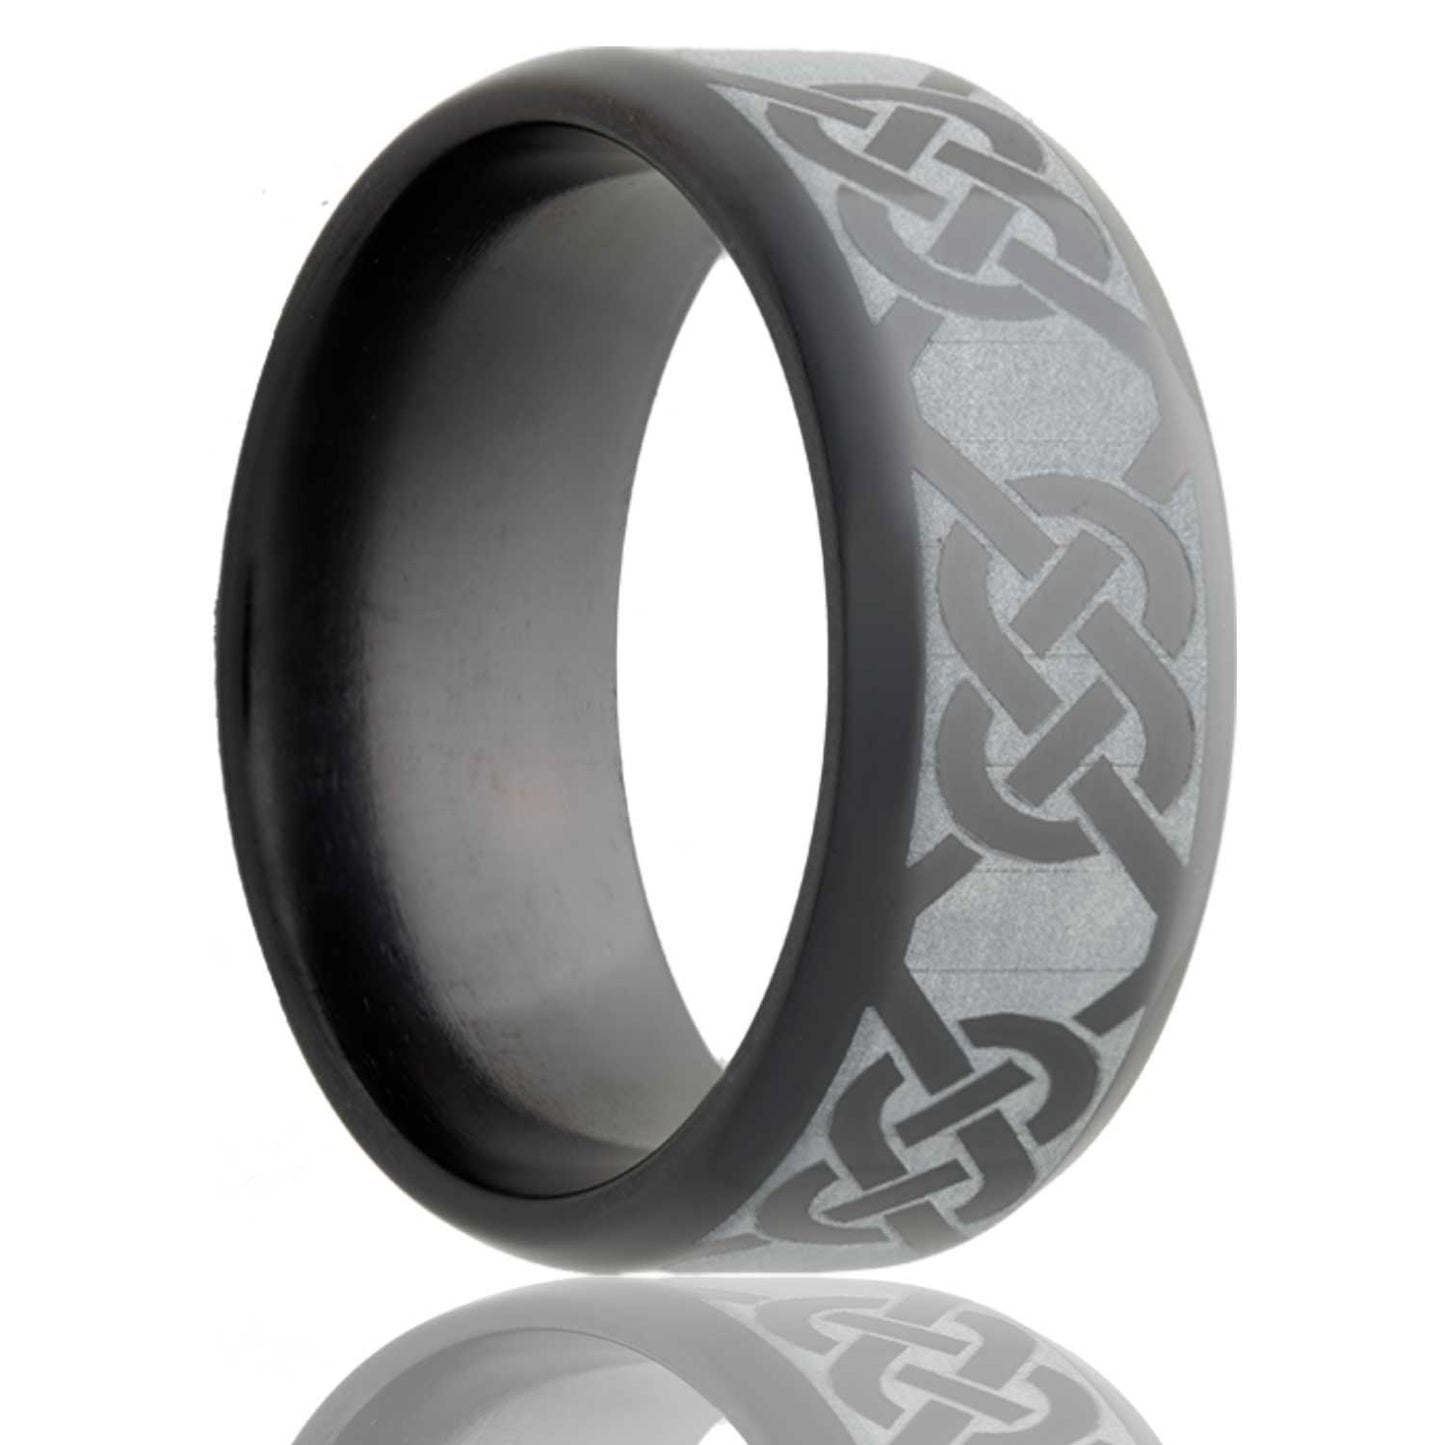 A eternity celtic knot zirconium wedding band with beveled edges displayed on a neutral white background.